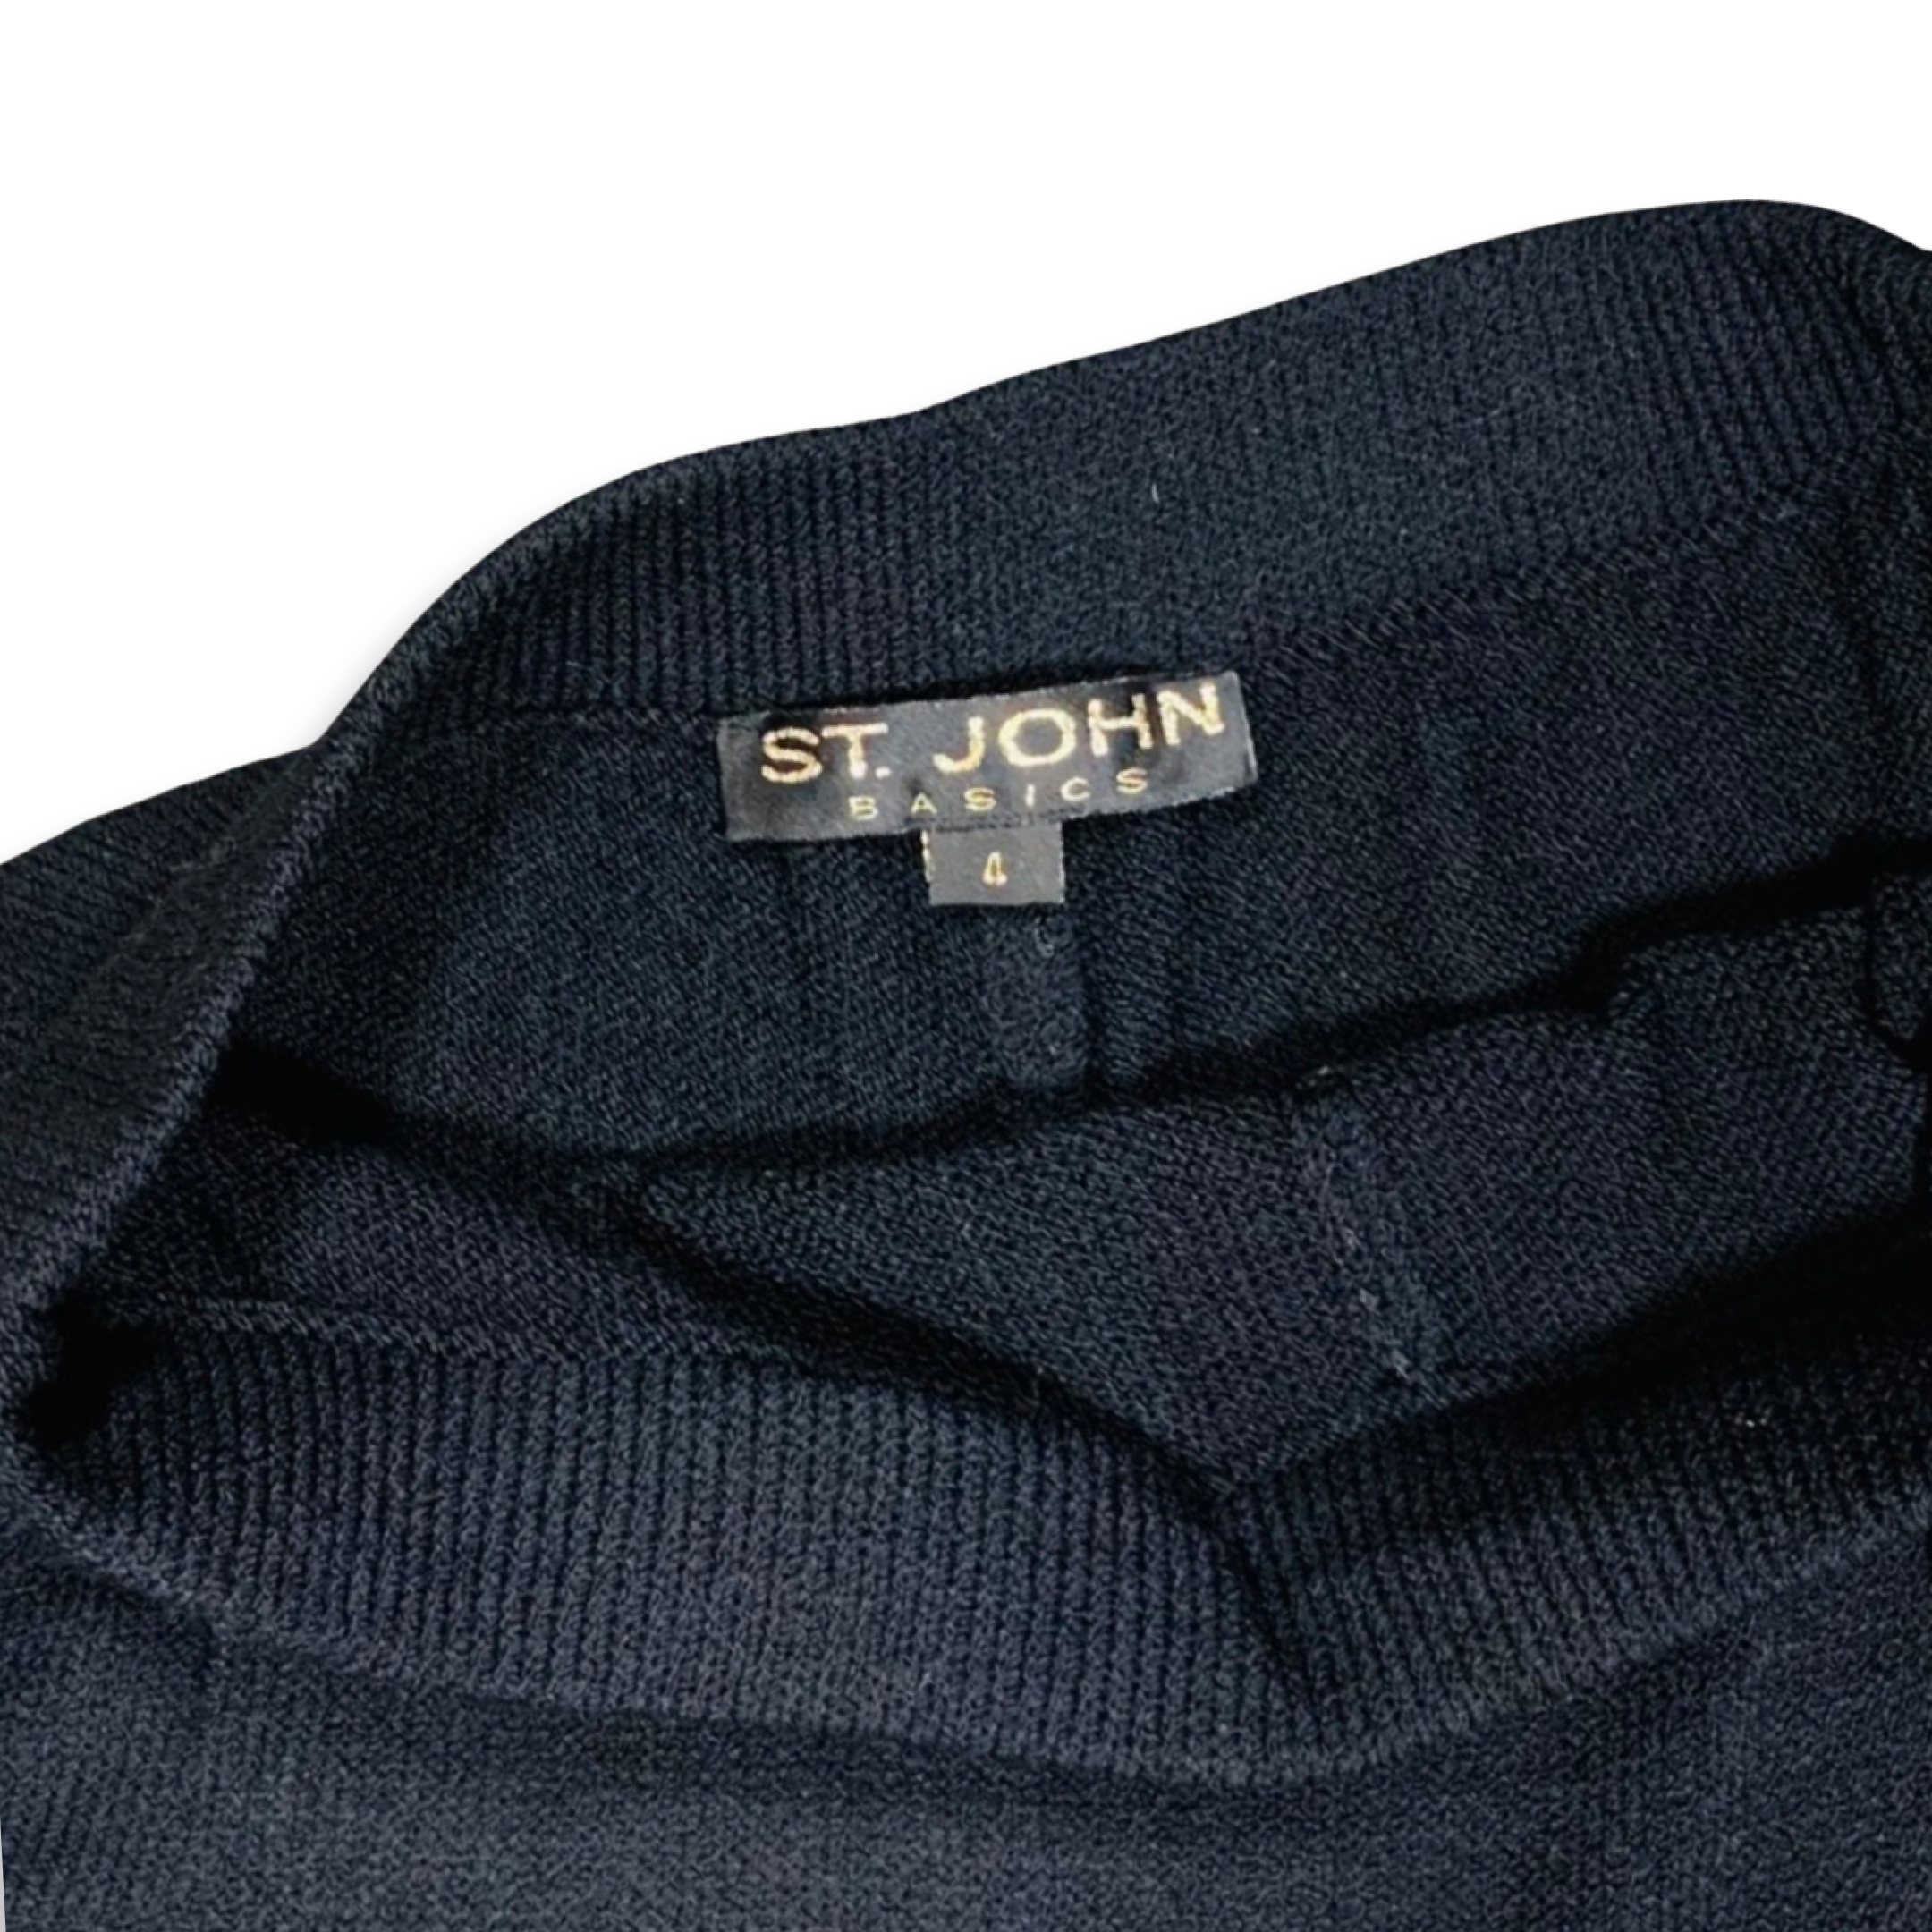 St. John Collection Santana Knit Straight Leg Pants in Black sz 2